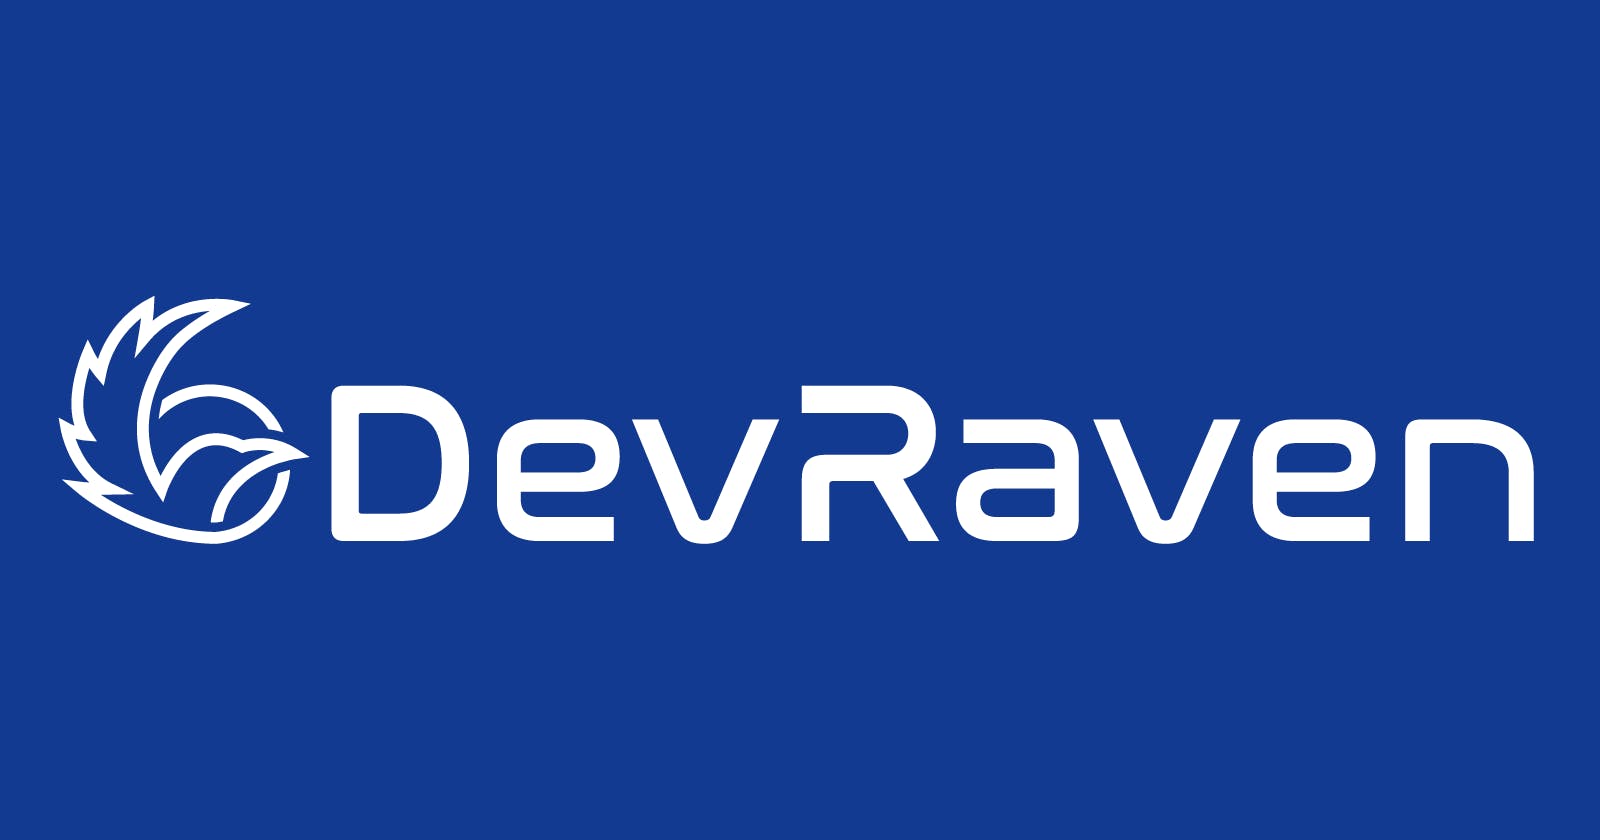 Introducing DevRaven